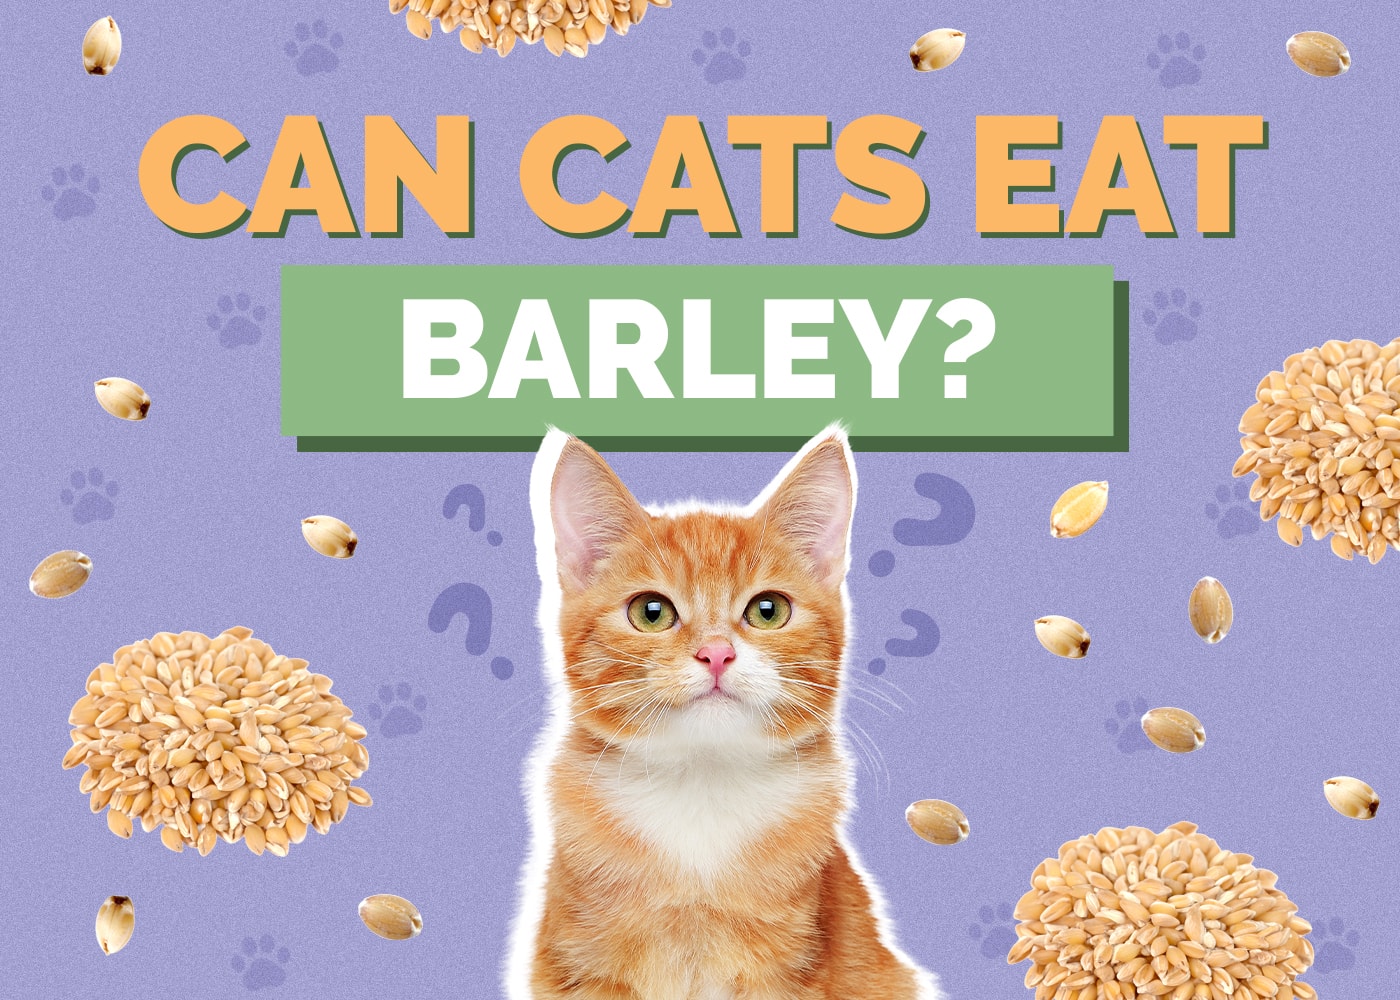 Can Cats Eat barley